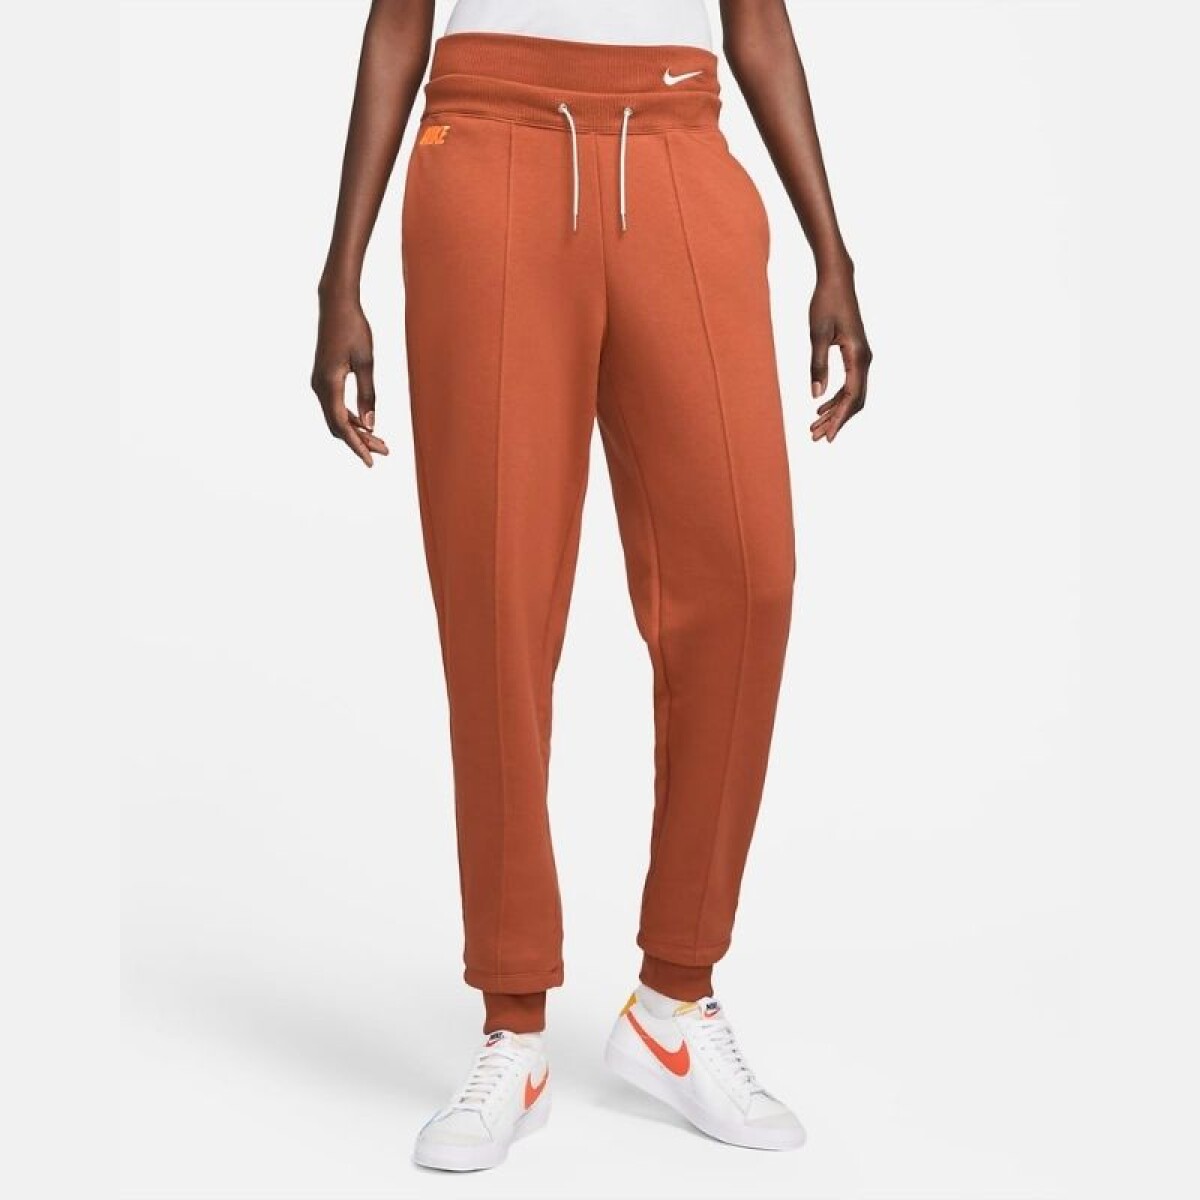 Pantalon Nike Moda Dama CN CLSH - Color Único 